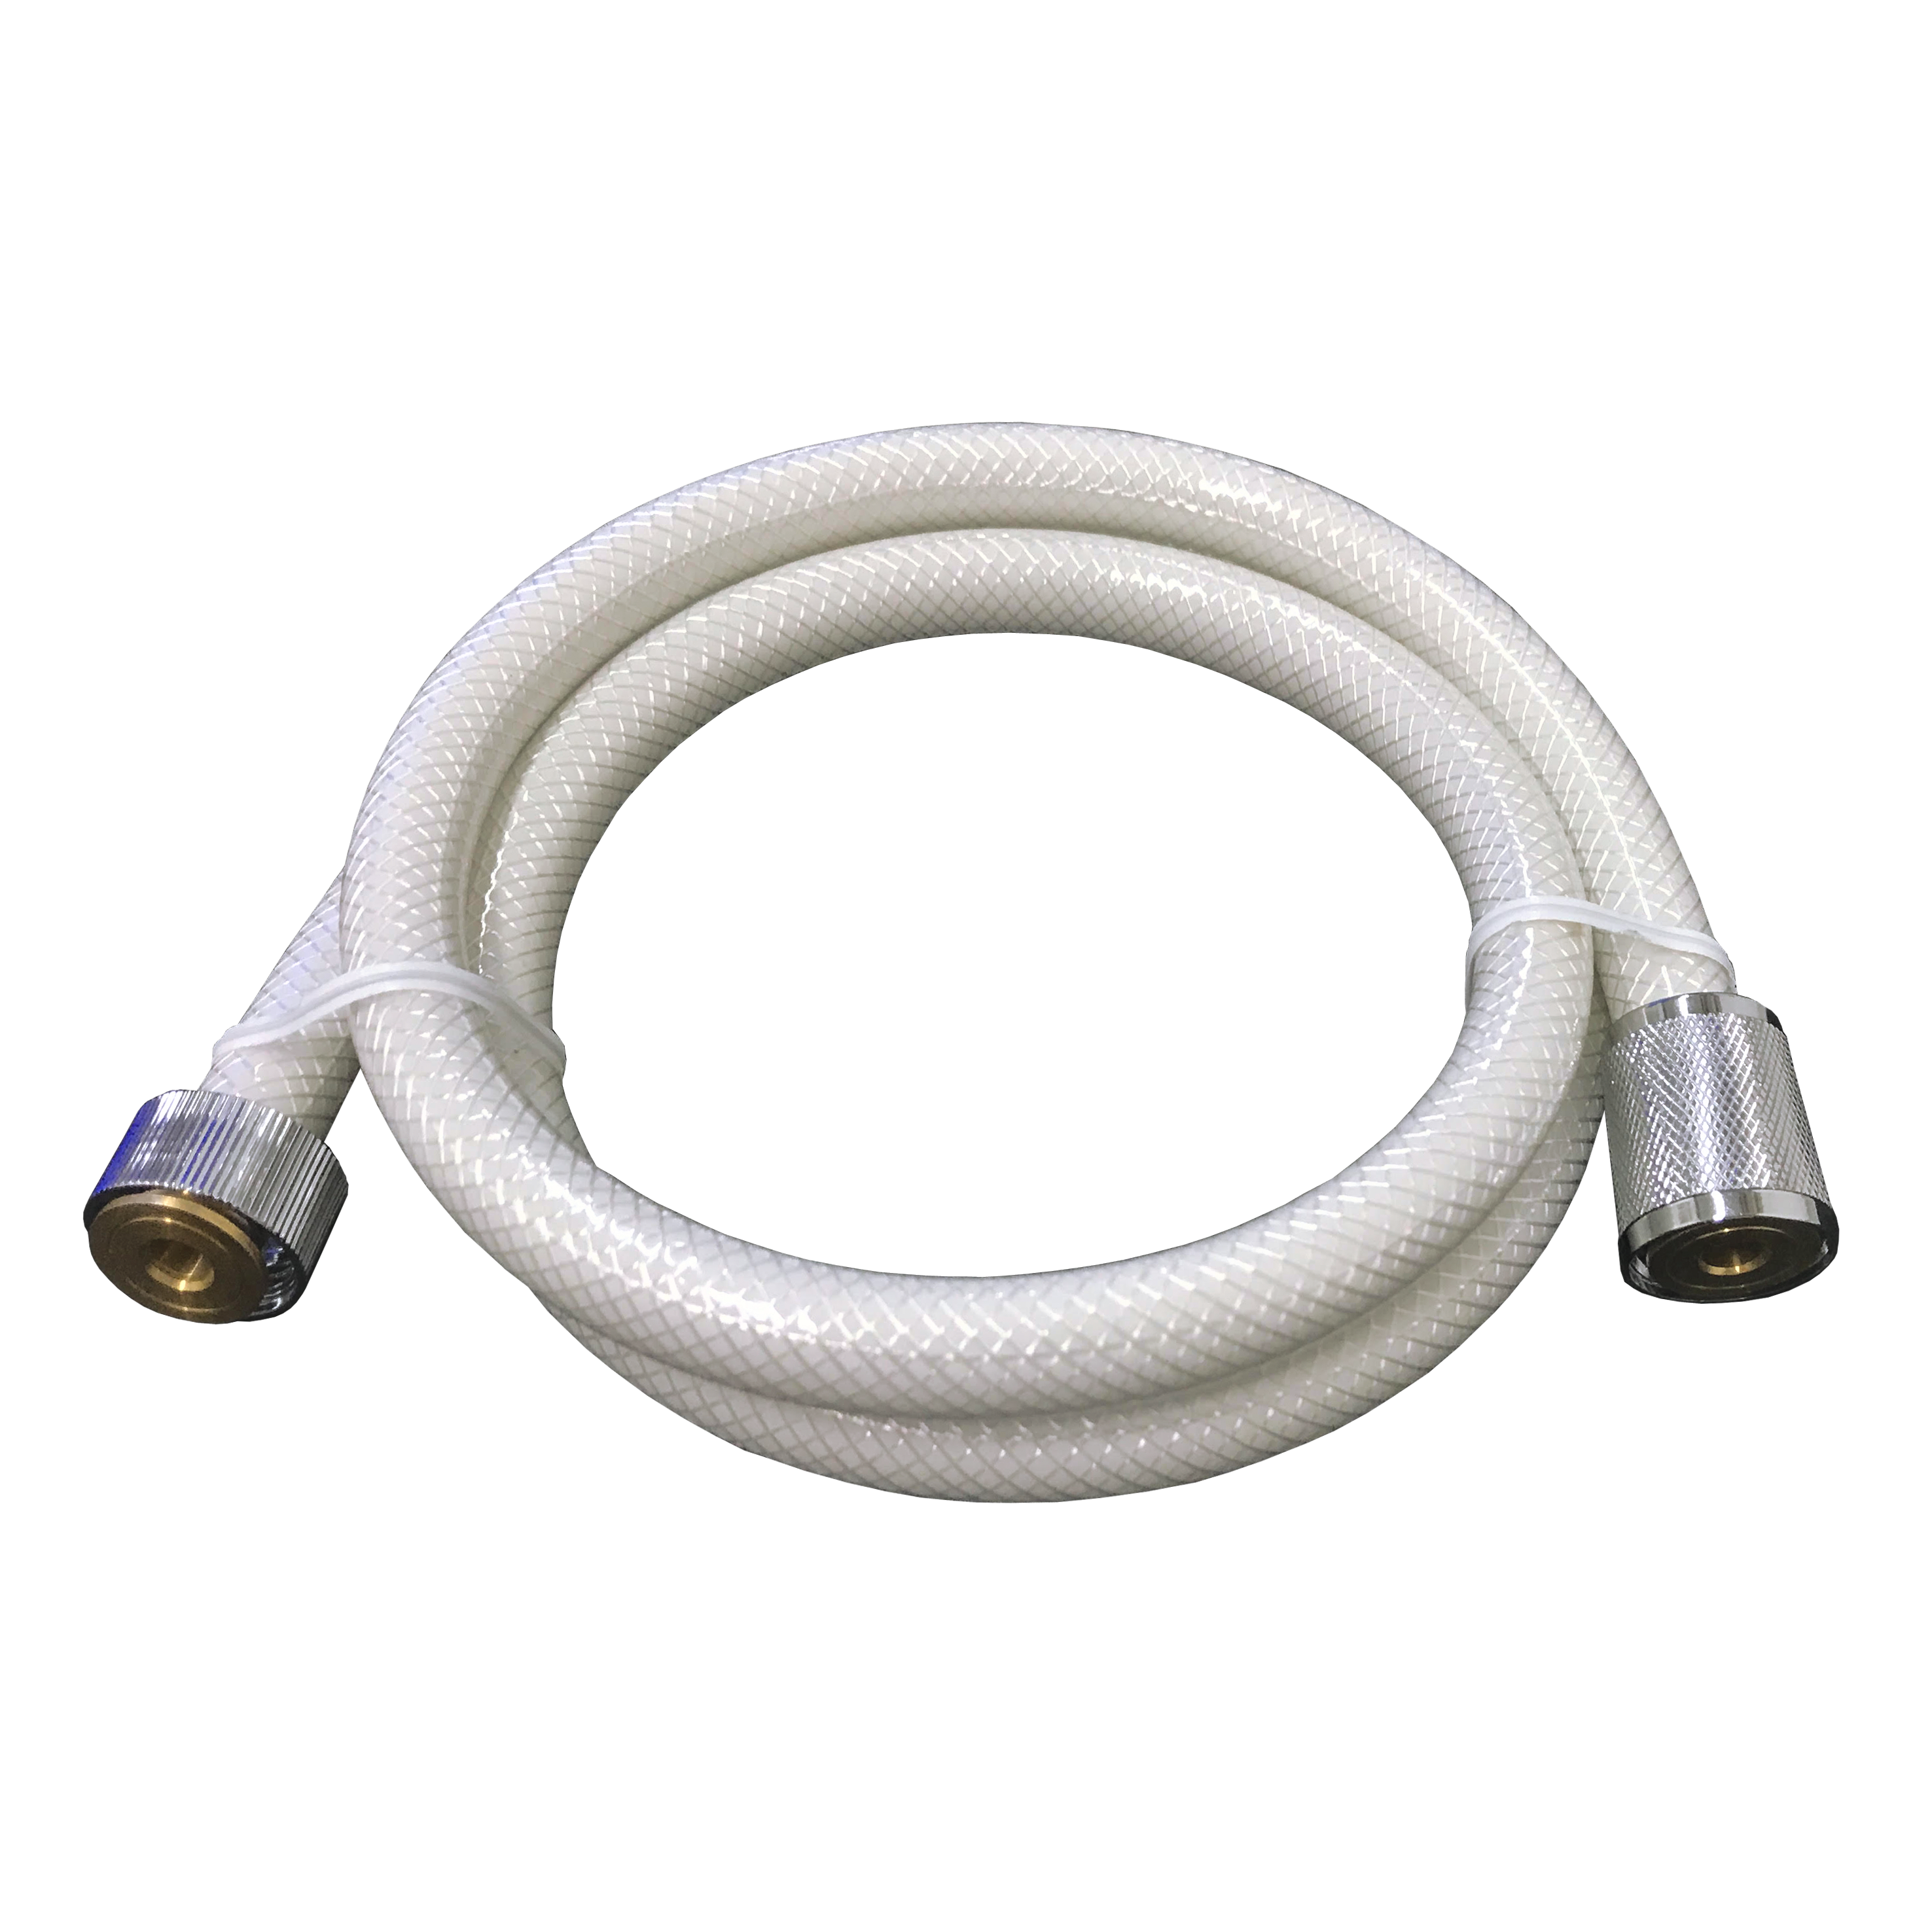 HUSKY 612-1.2m (4' PVC Flexible Hose (White))